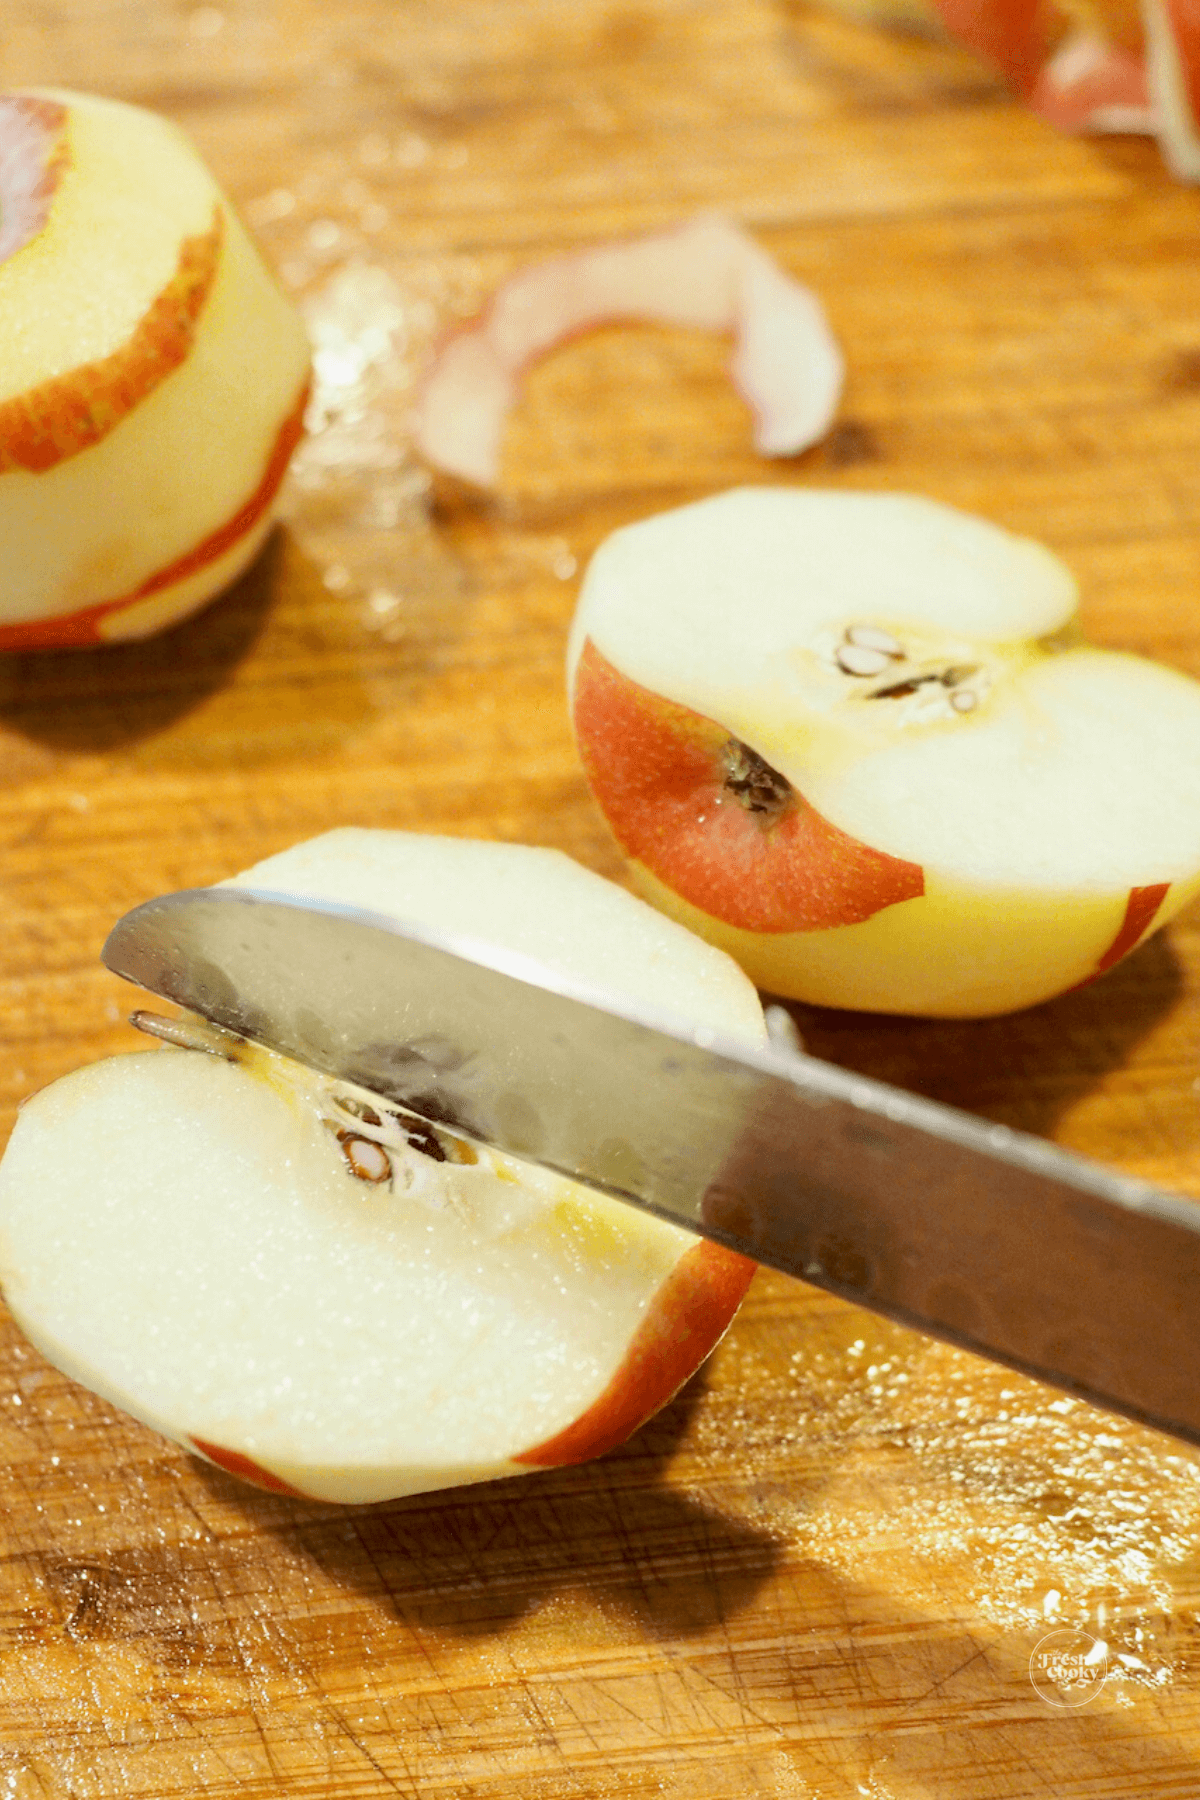 Apple cut in half.